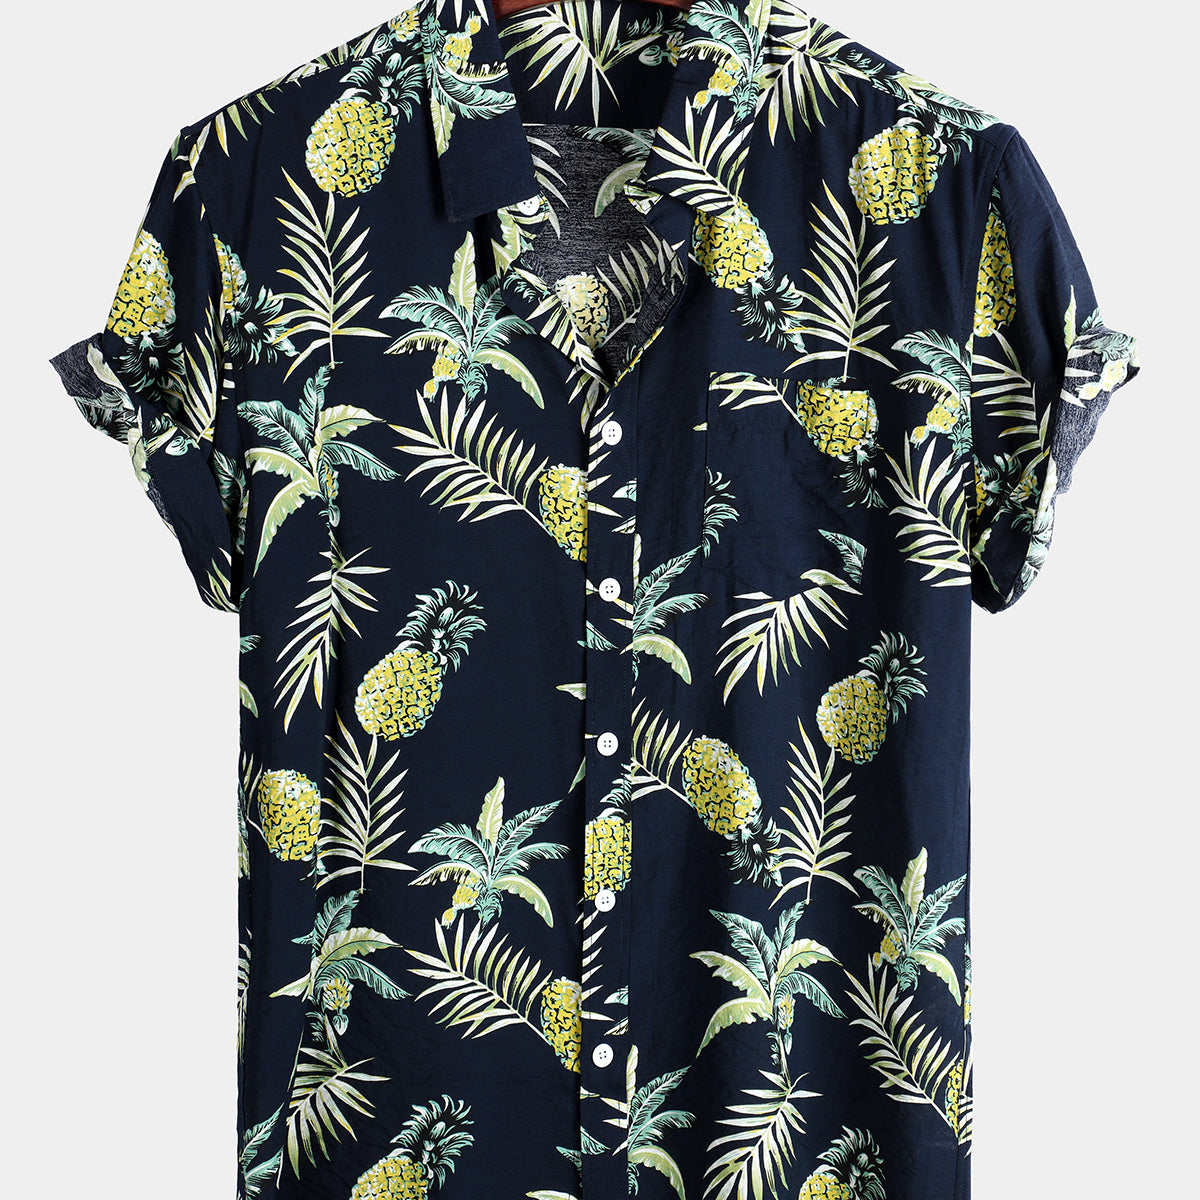 Men's Holiday Pineapple Short Sleeve Pocket Shirt